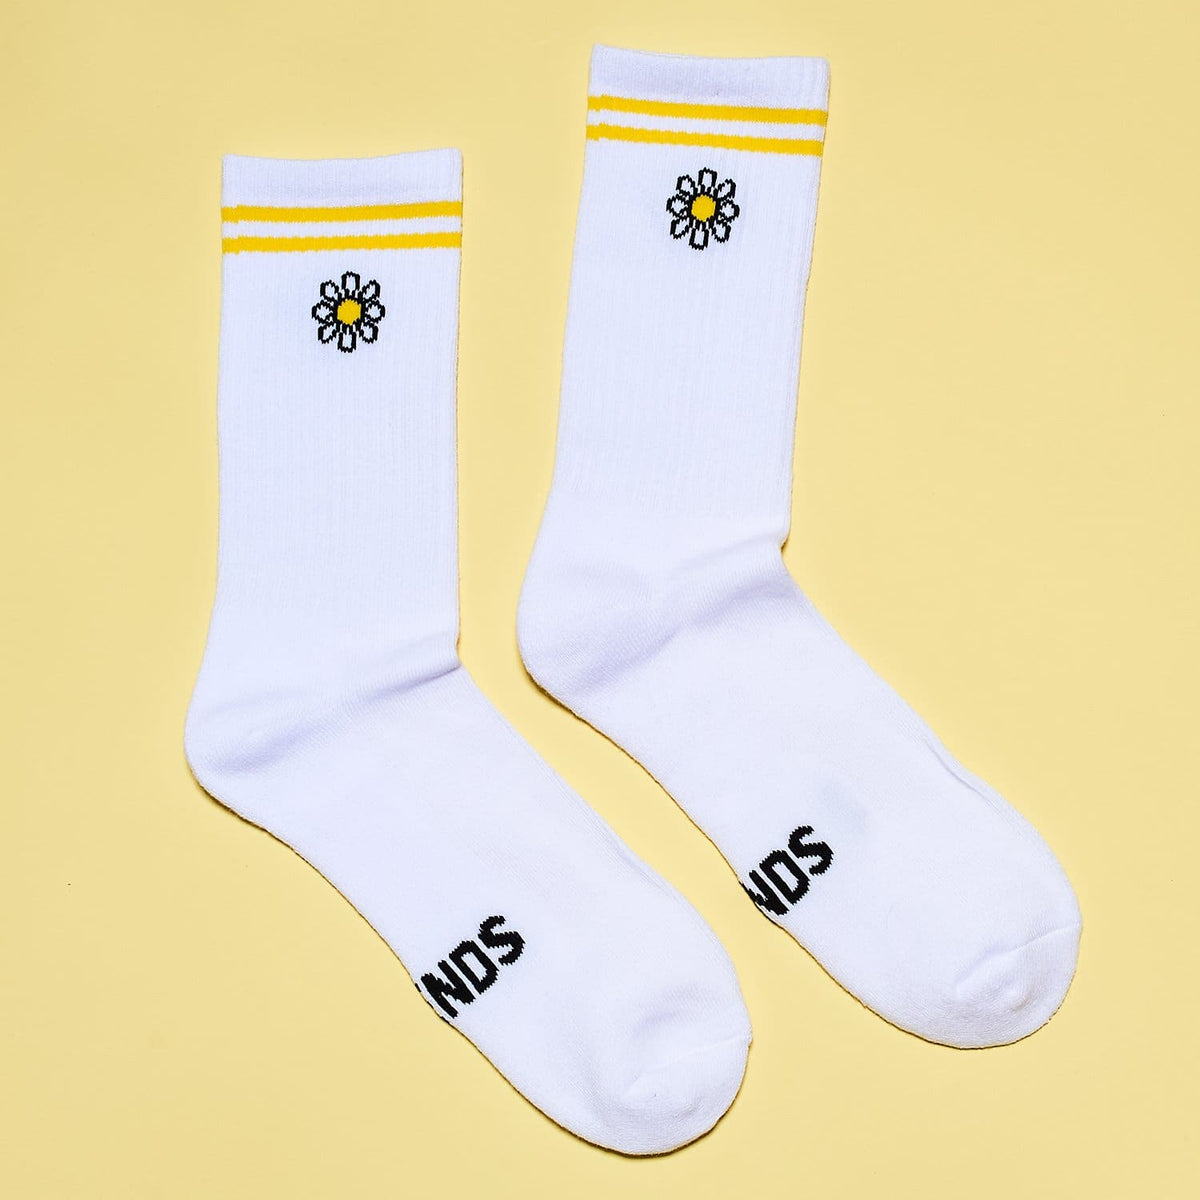 Friends Daisy Socks Athletic Socks - Tube - Daisy - Flower -